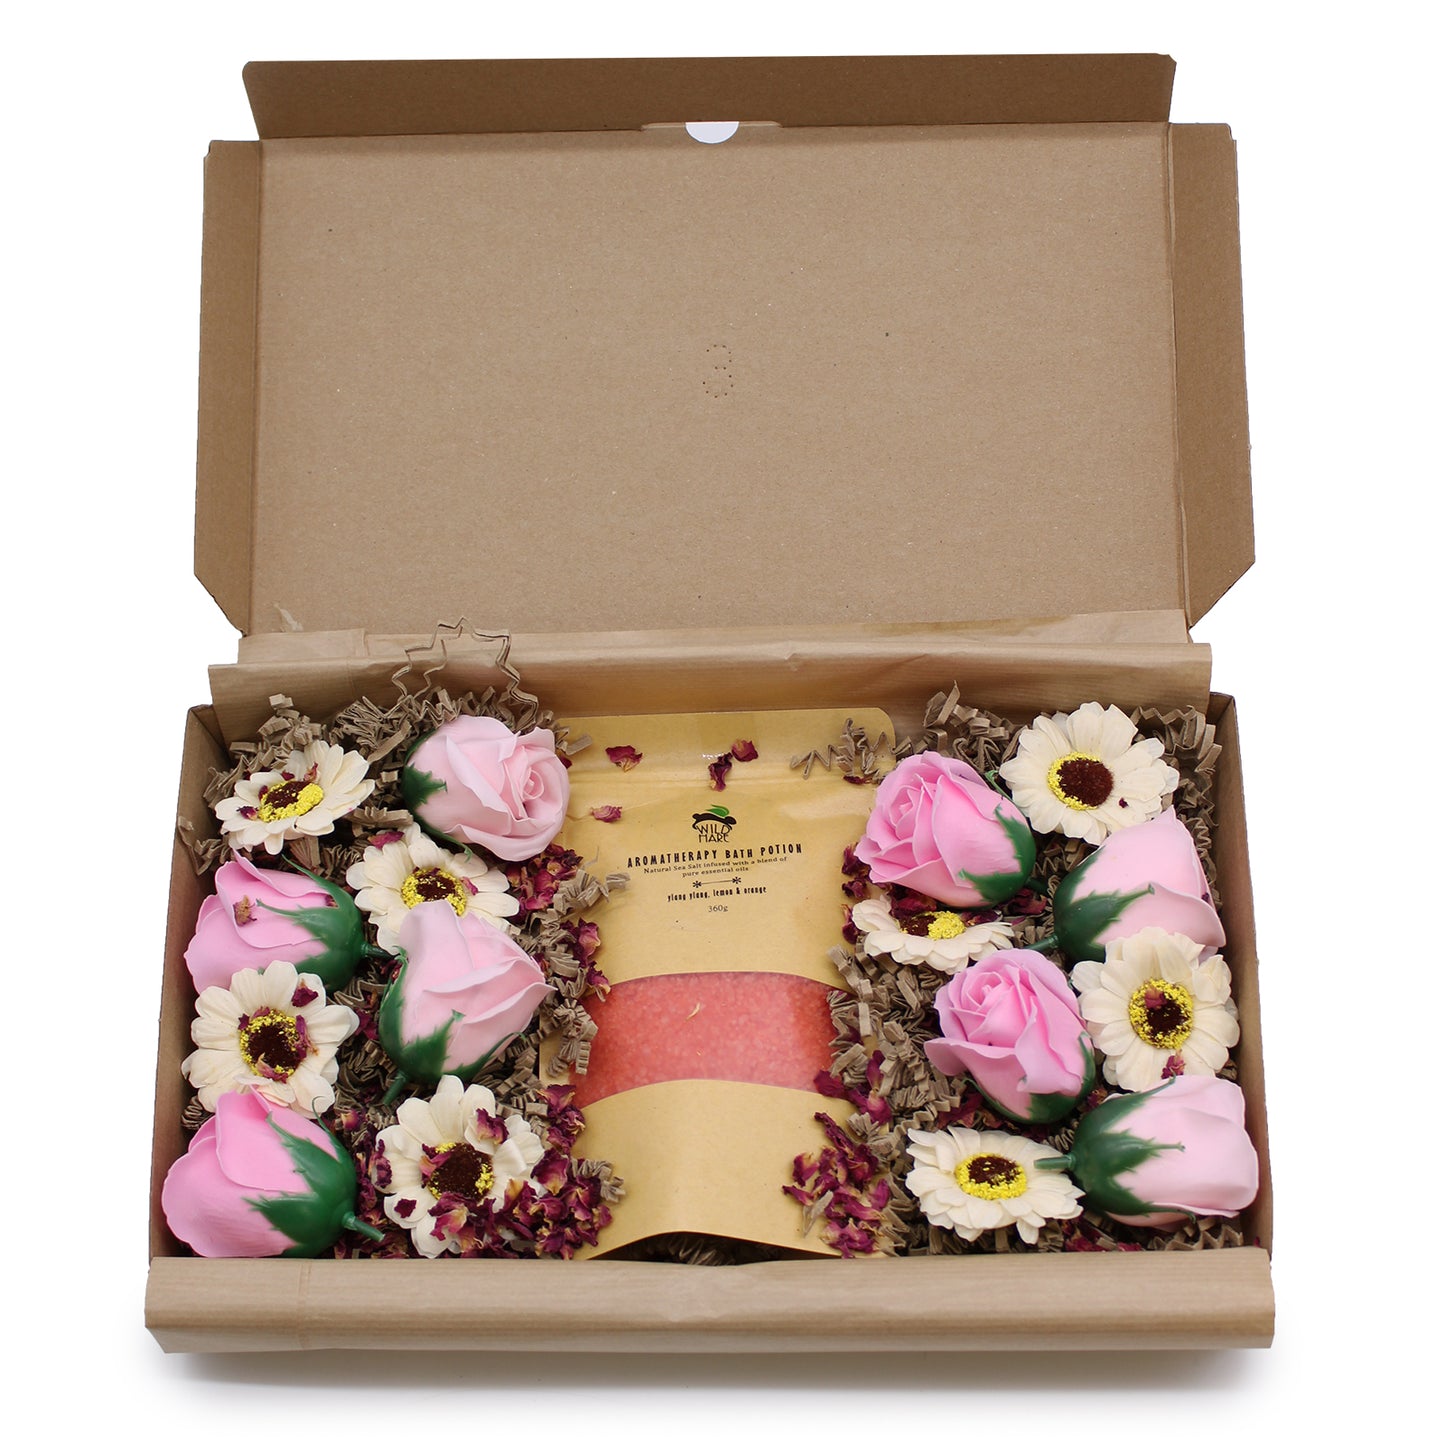 Aromatherapy Bath Potion Rose Gift Box